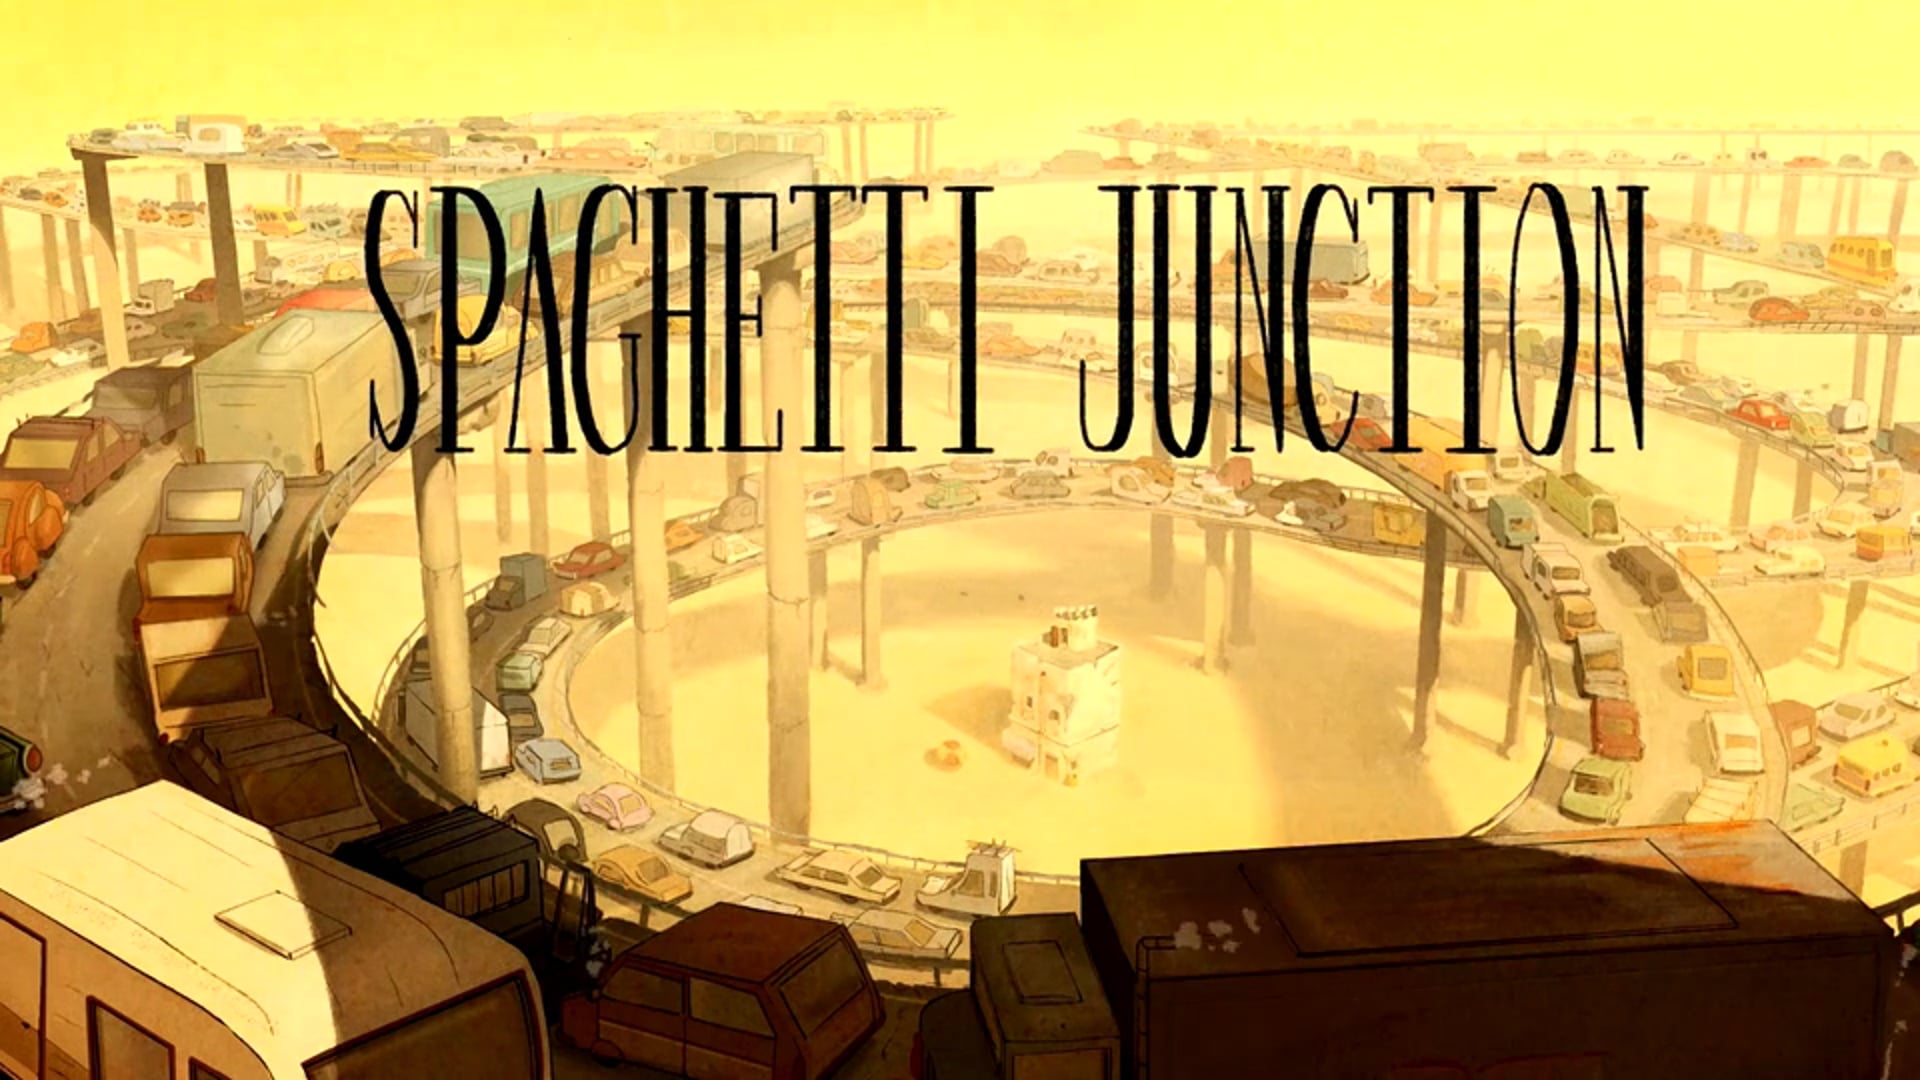 Spaghetti Junction (Animation)